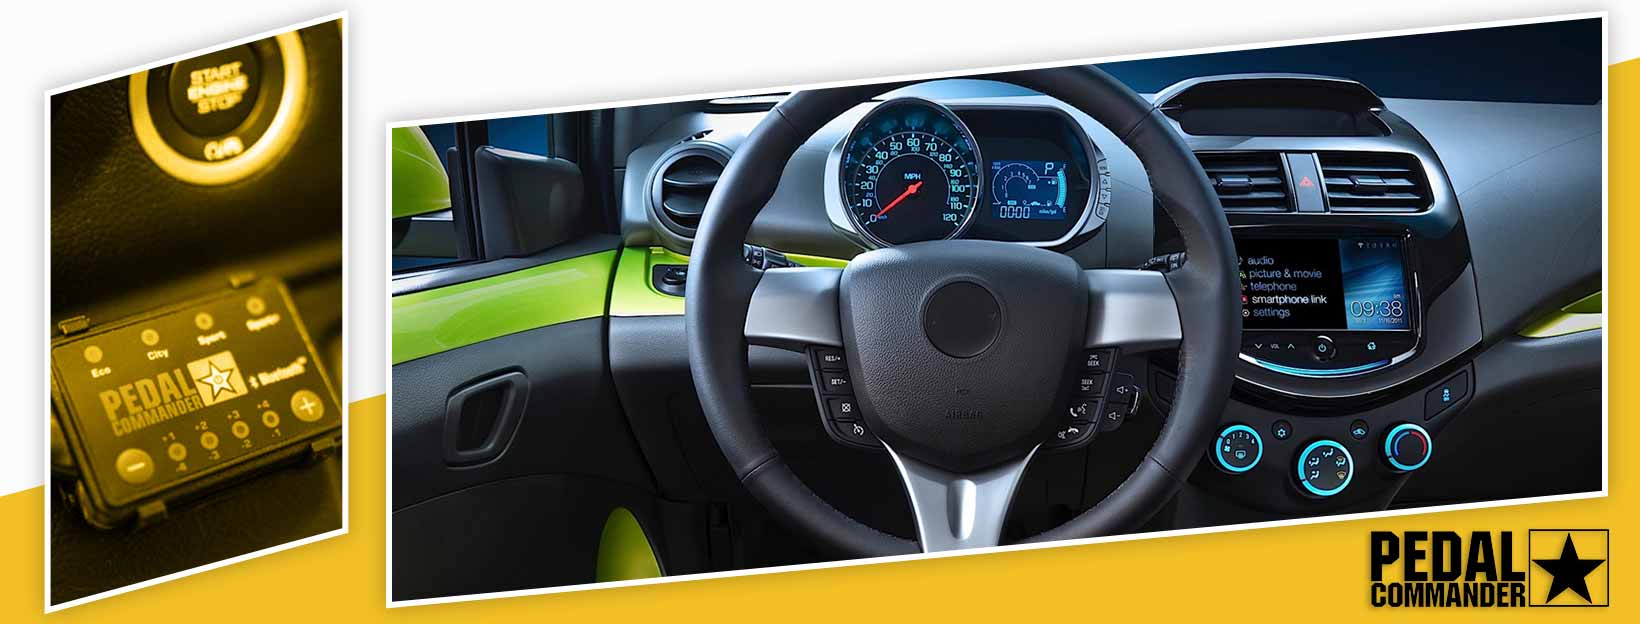 Pedal Commander for Chevrolet Spark - interior